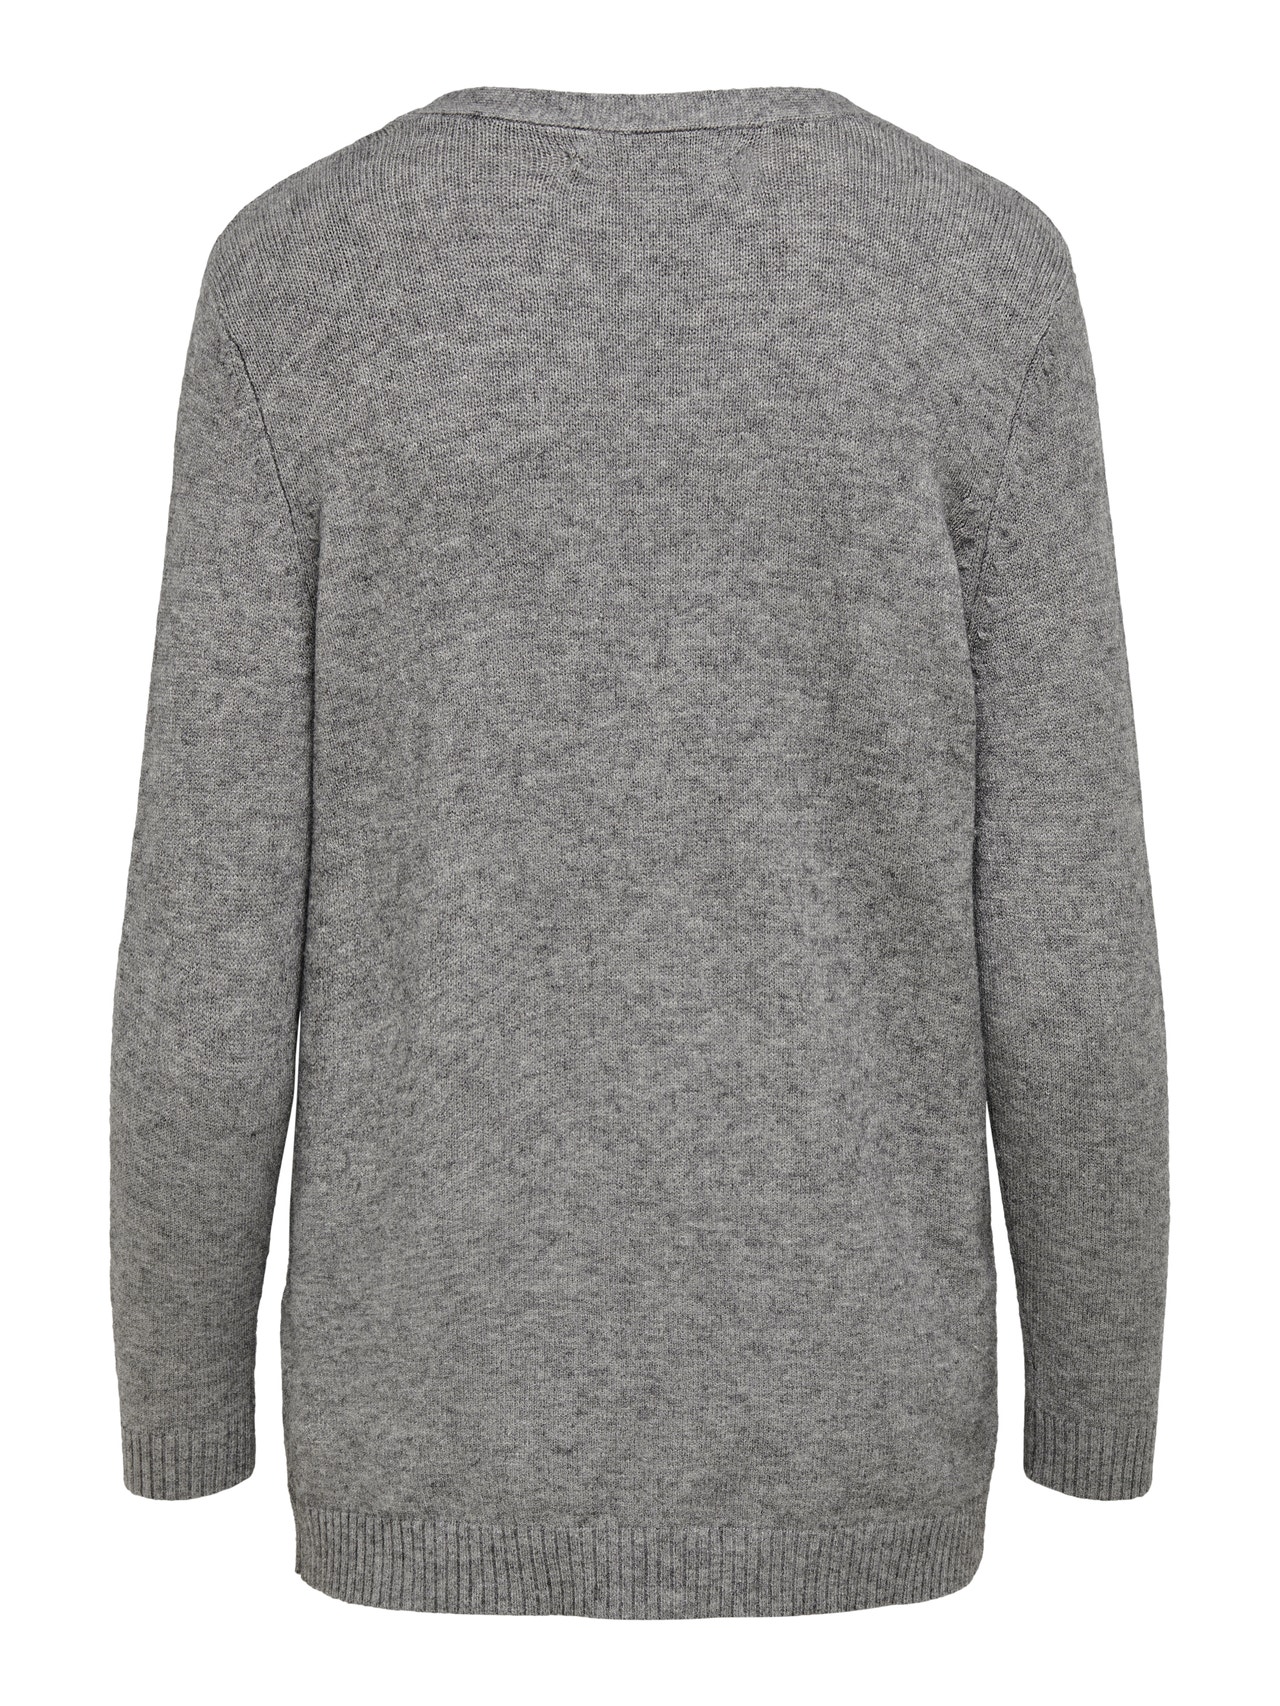 ONLY Knitted cardigan -Medium Grey Melange - 15174274